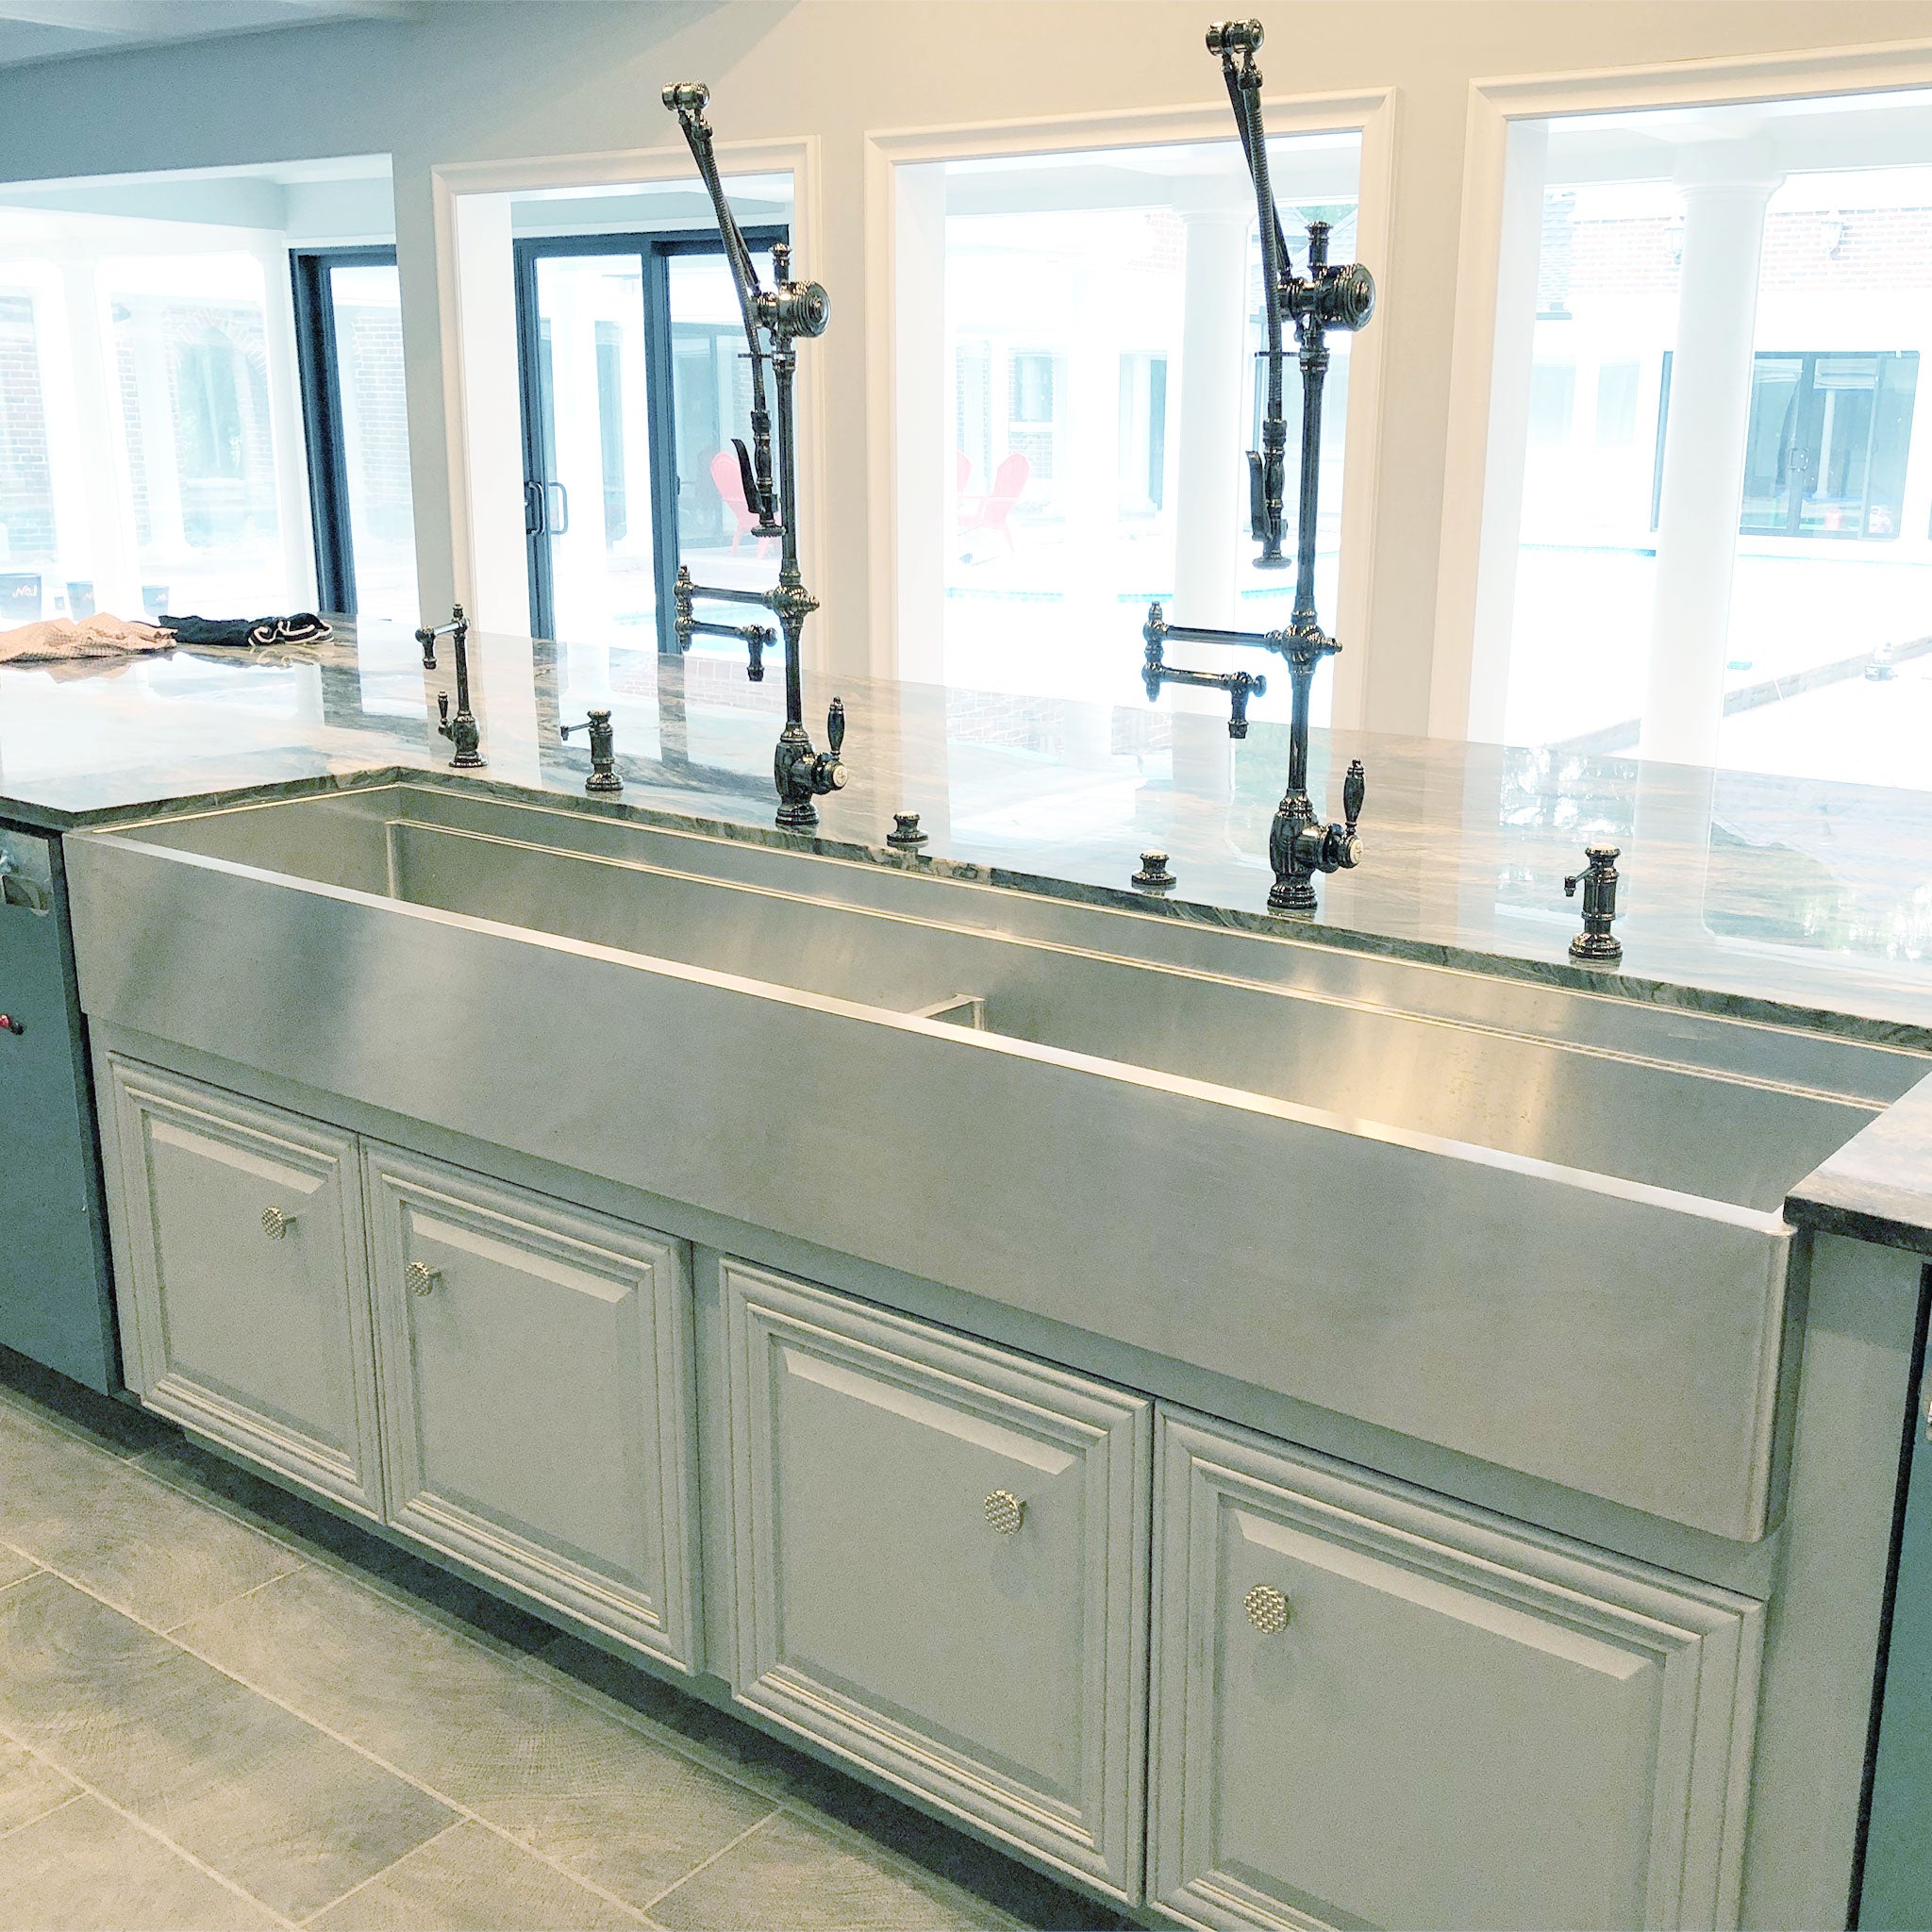 Oversized dual basin 84” Workstation Stainless Steel Kitchen Sink